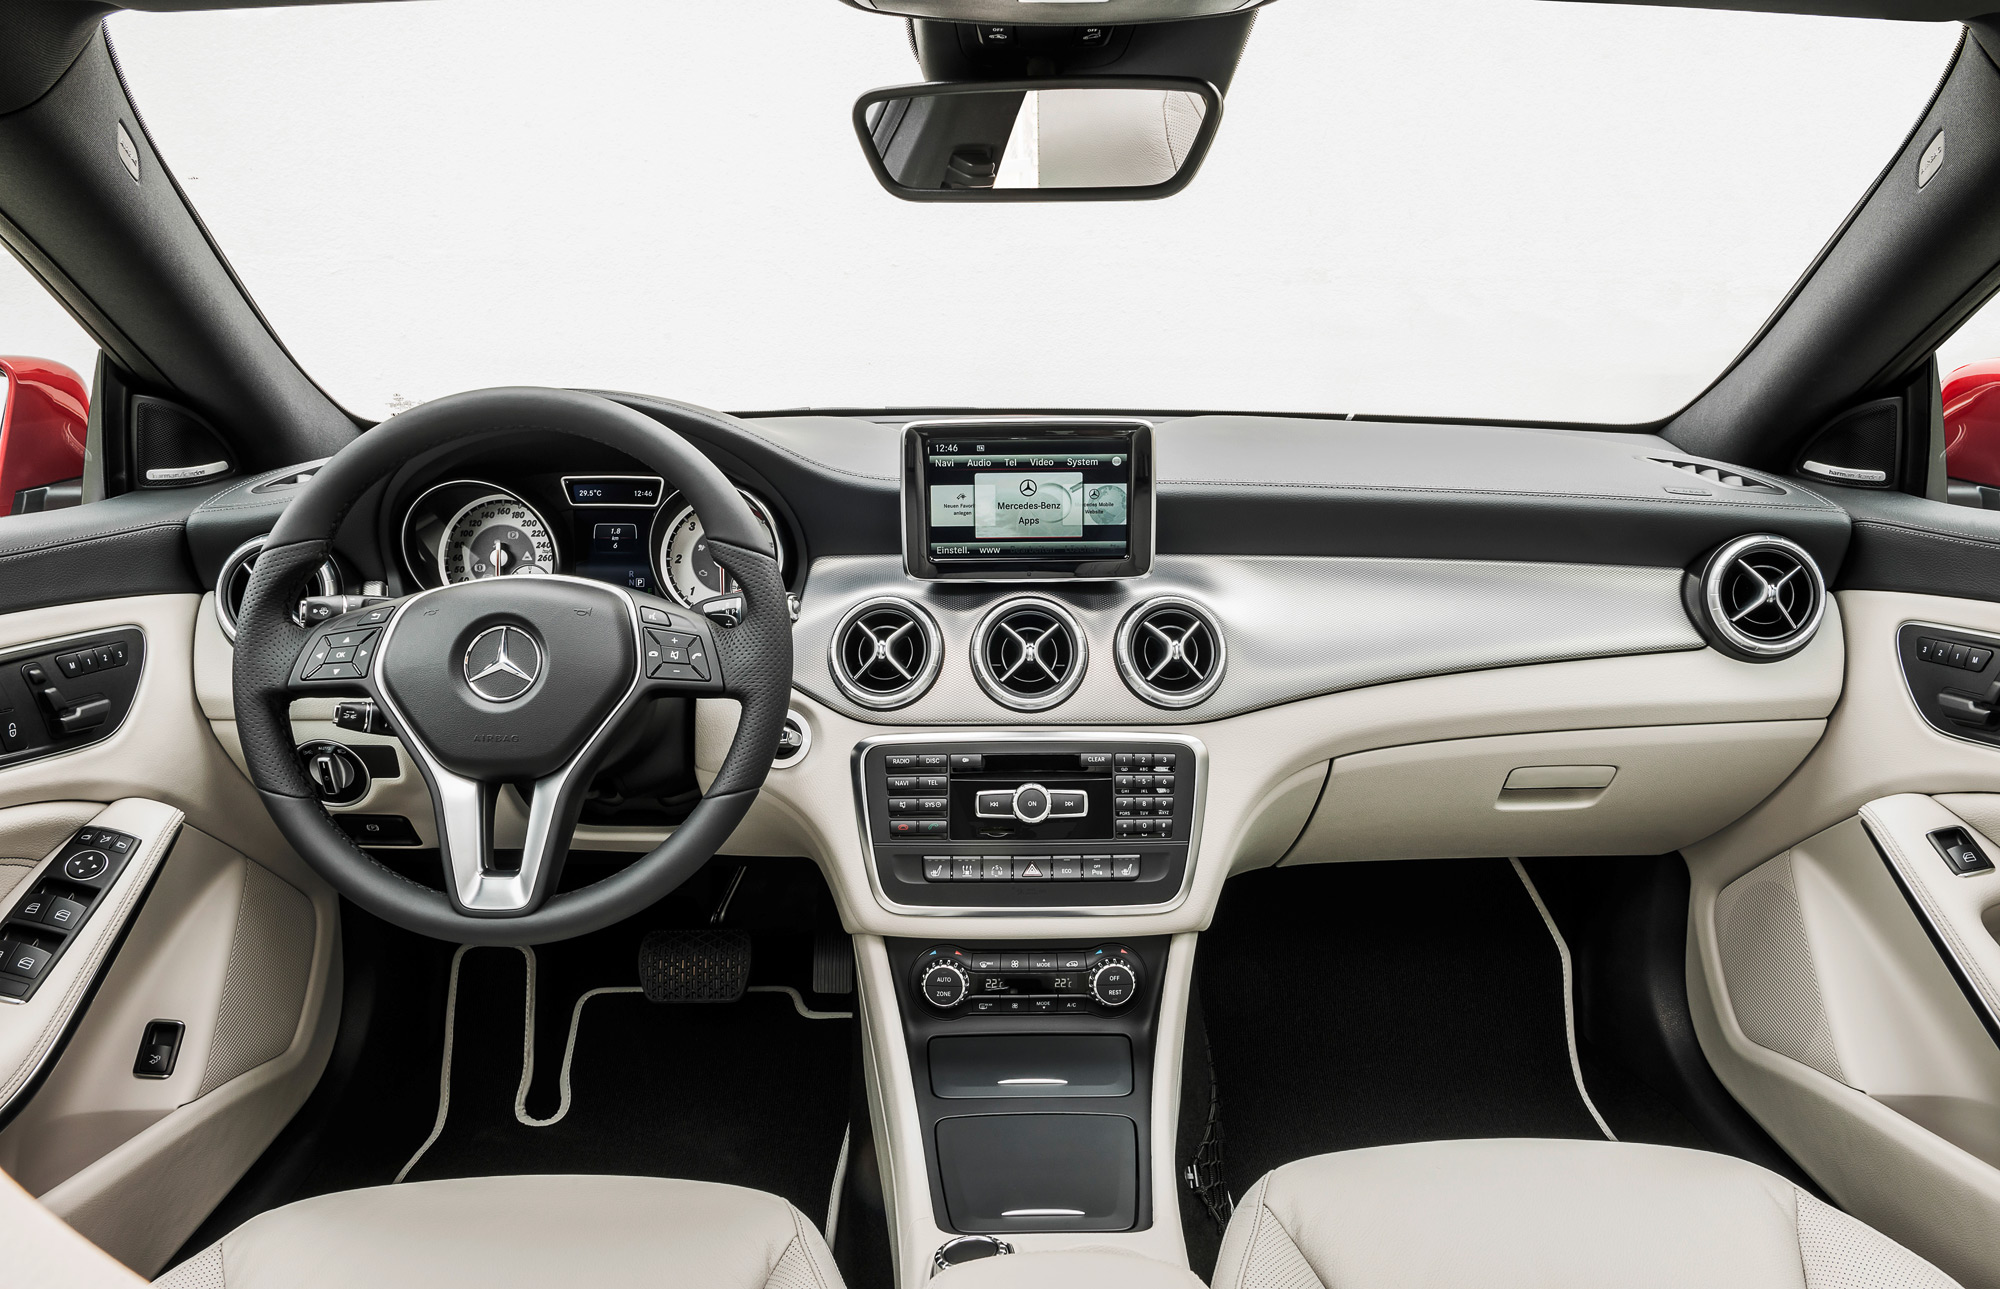 Mercedes Benz 2014 Interior